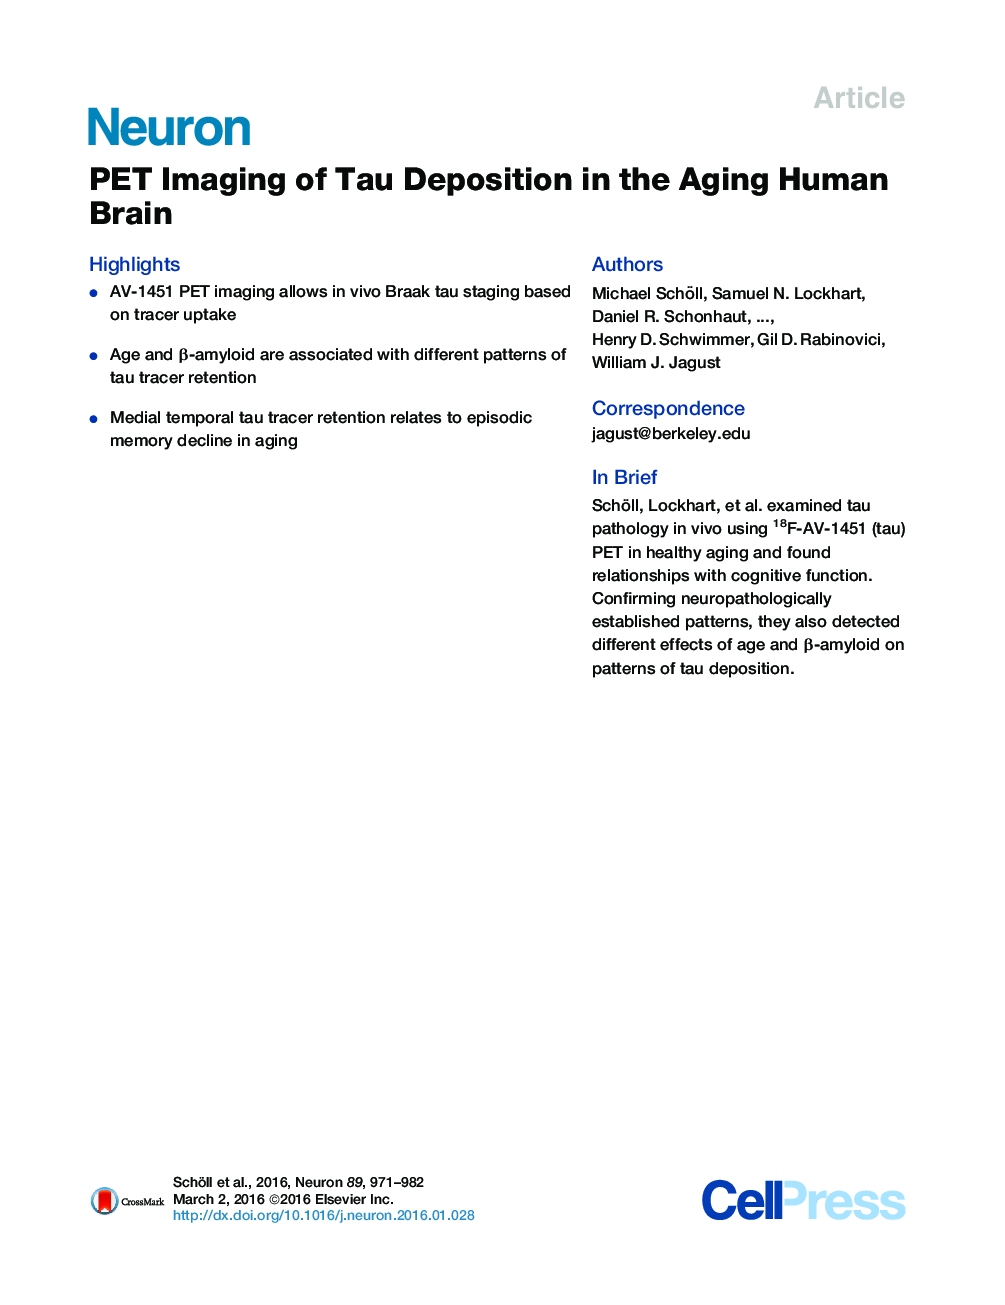 PET Imaging of Tau Deposition in the Aging Human Brain